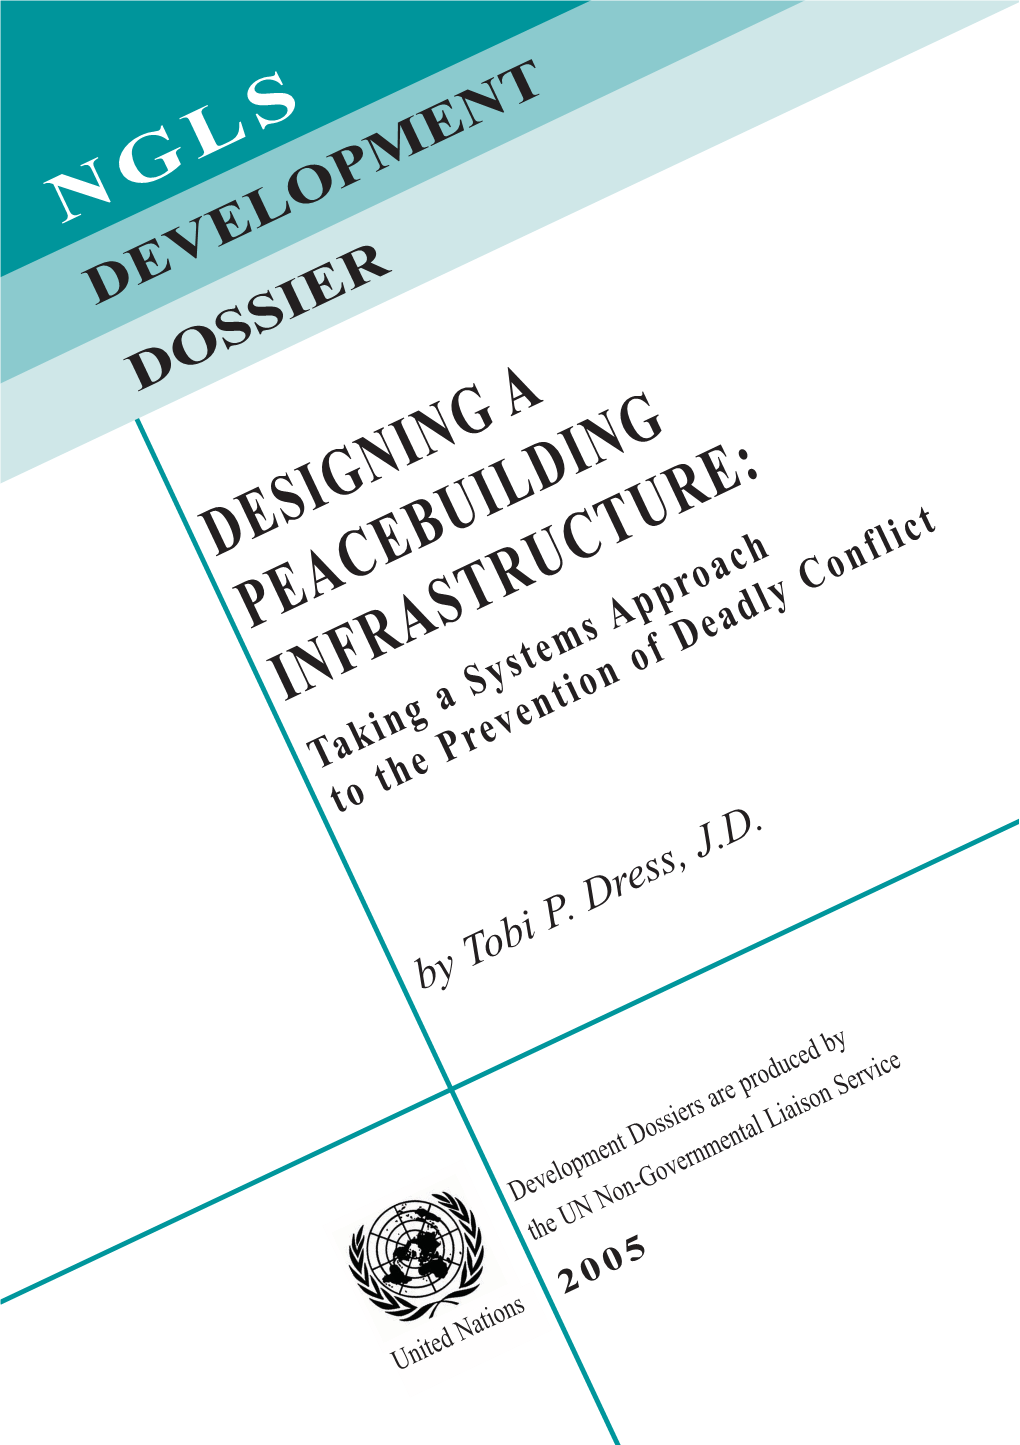 Designinga Peacebuilding Infrastructure